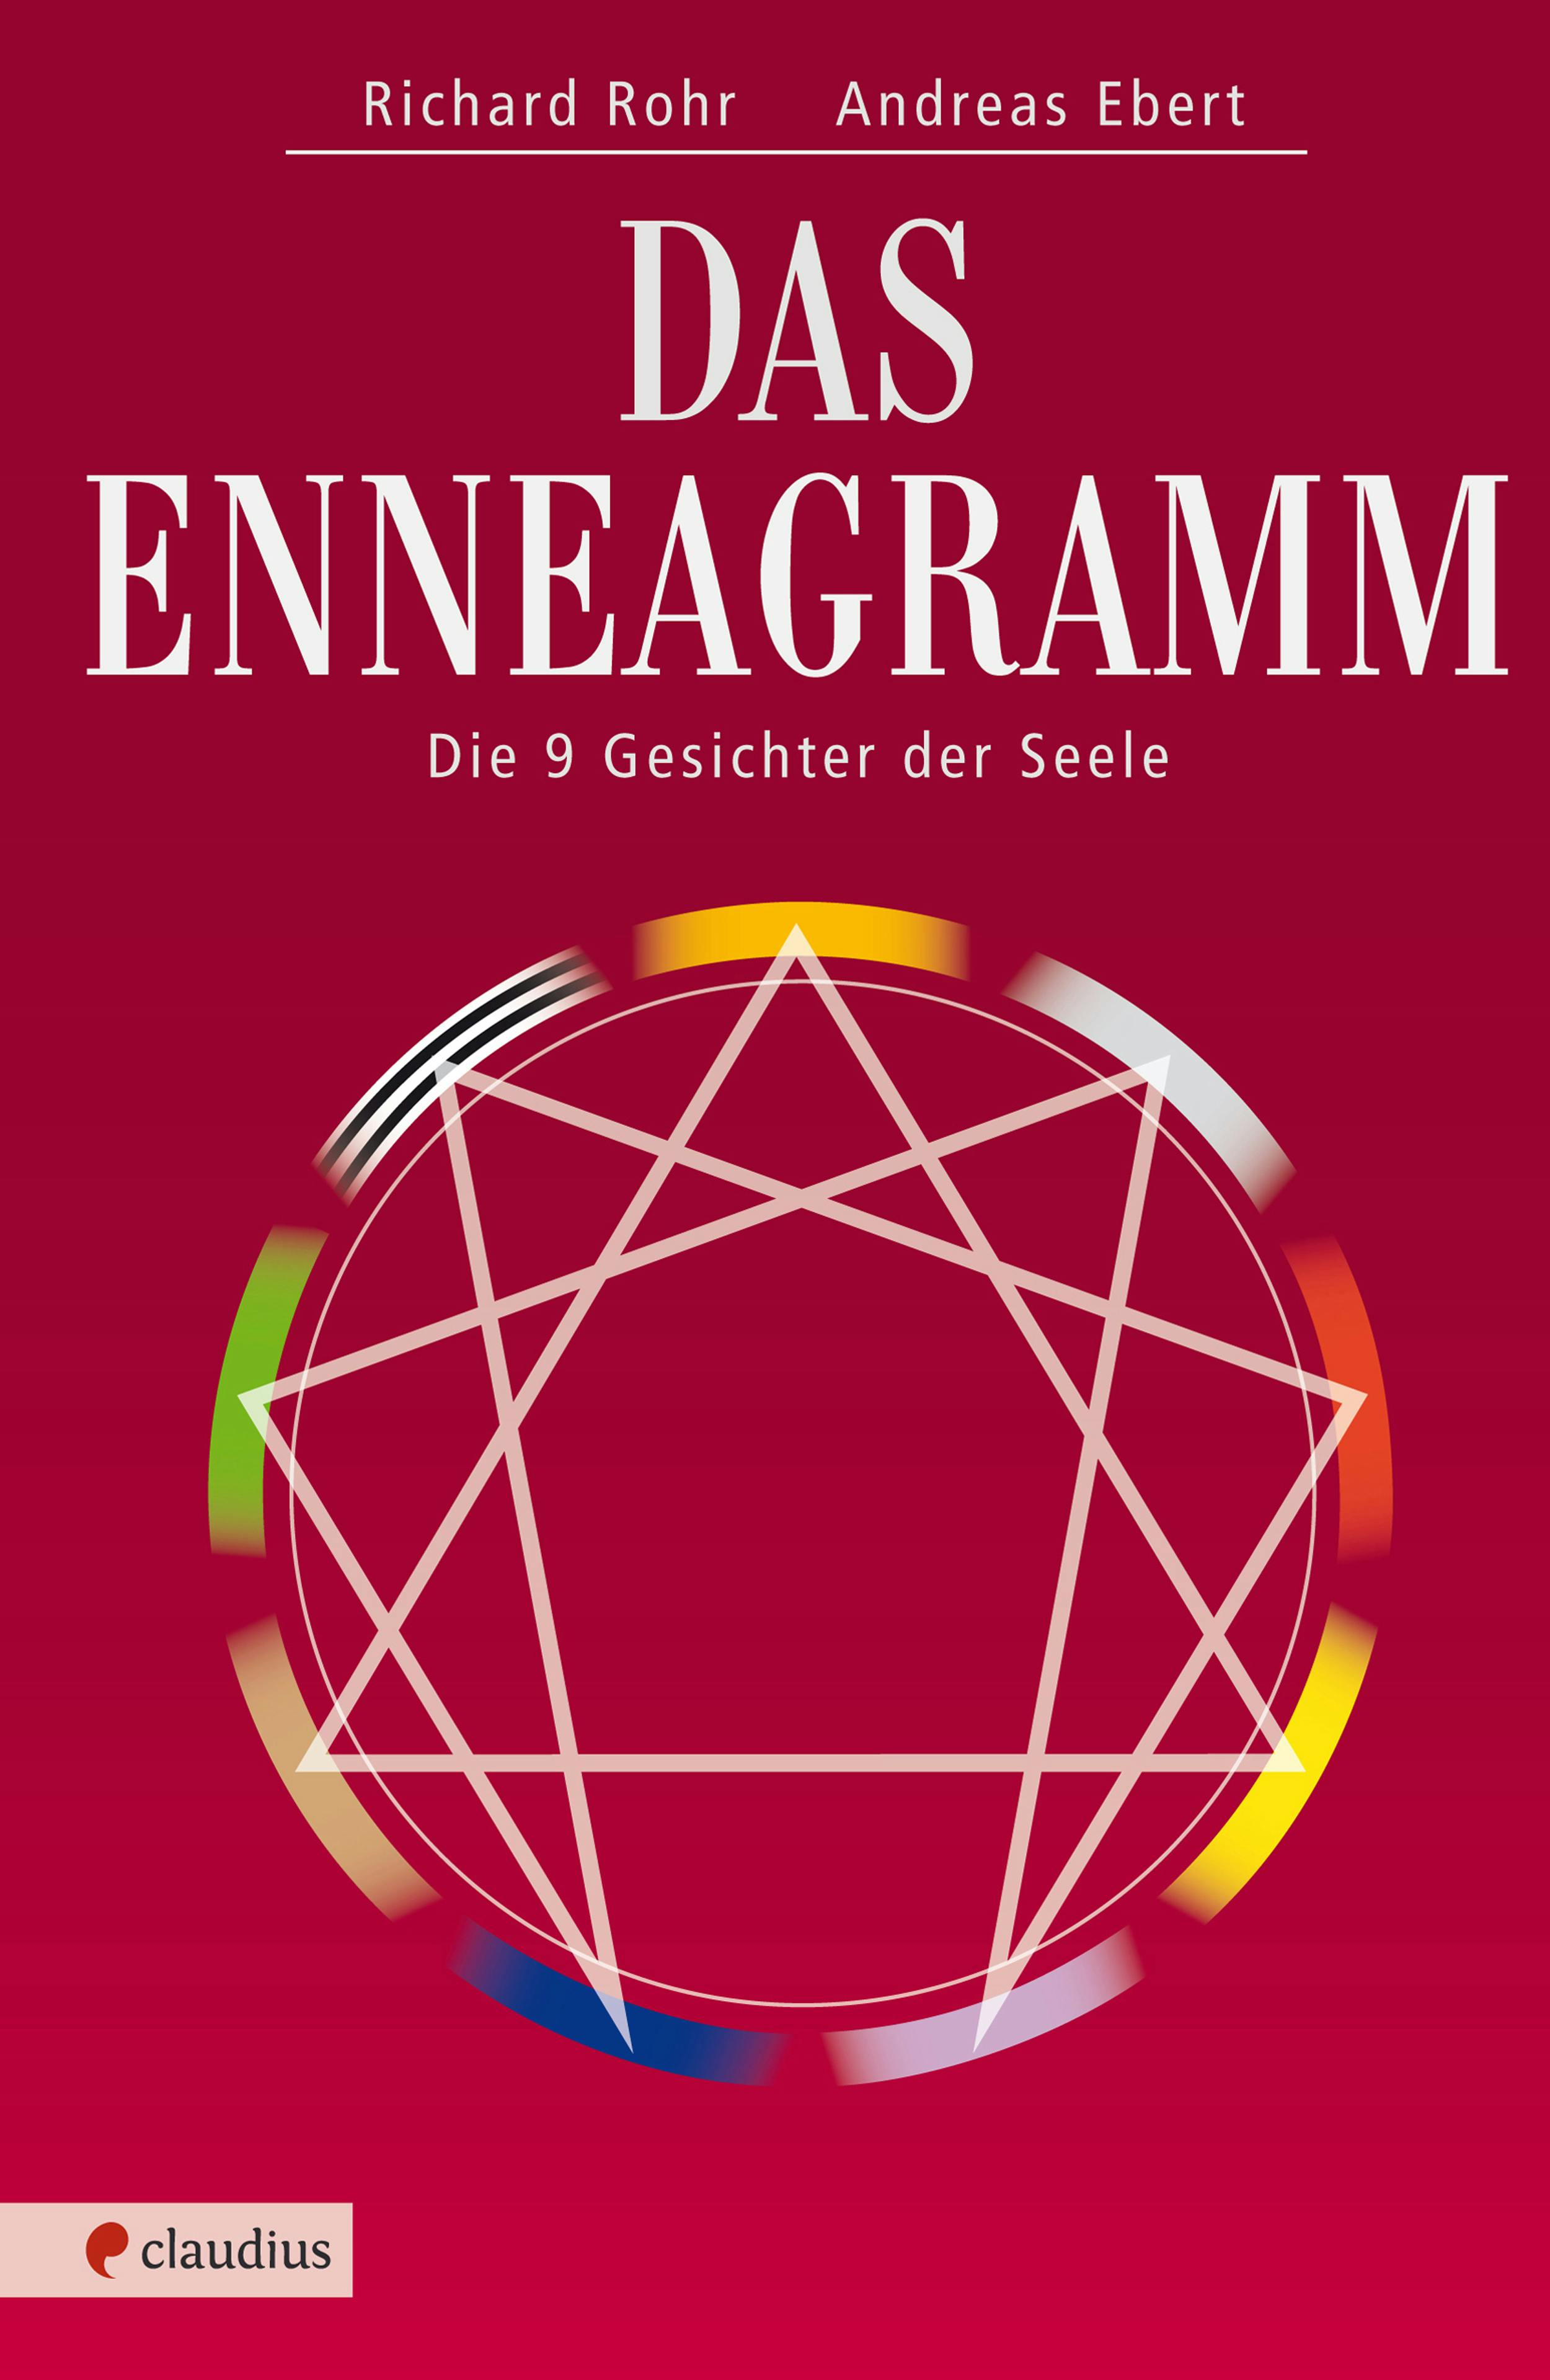 Das Enneagramm - Andreas Ebert, Richard Rohr